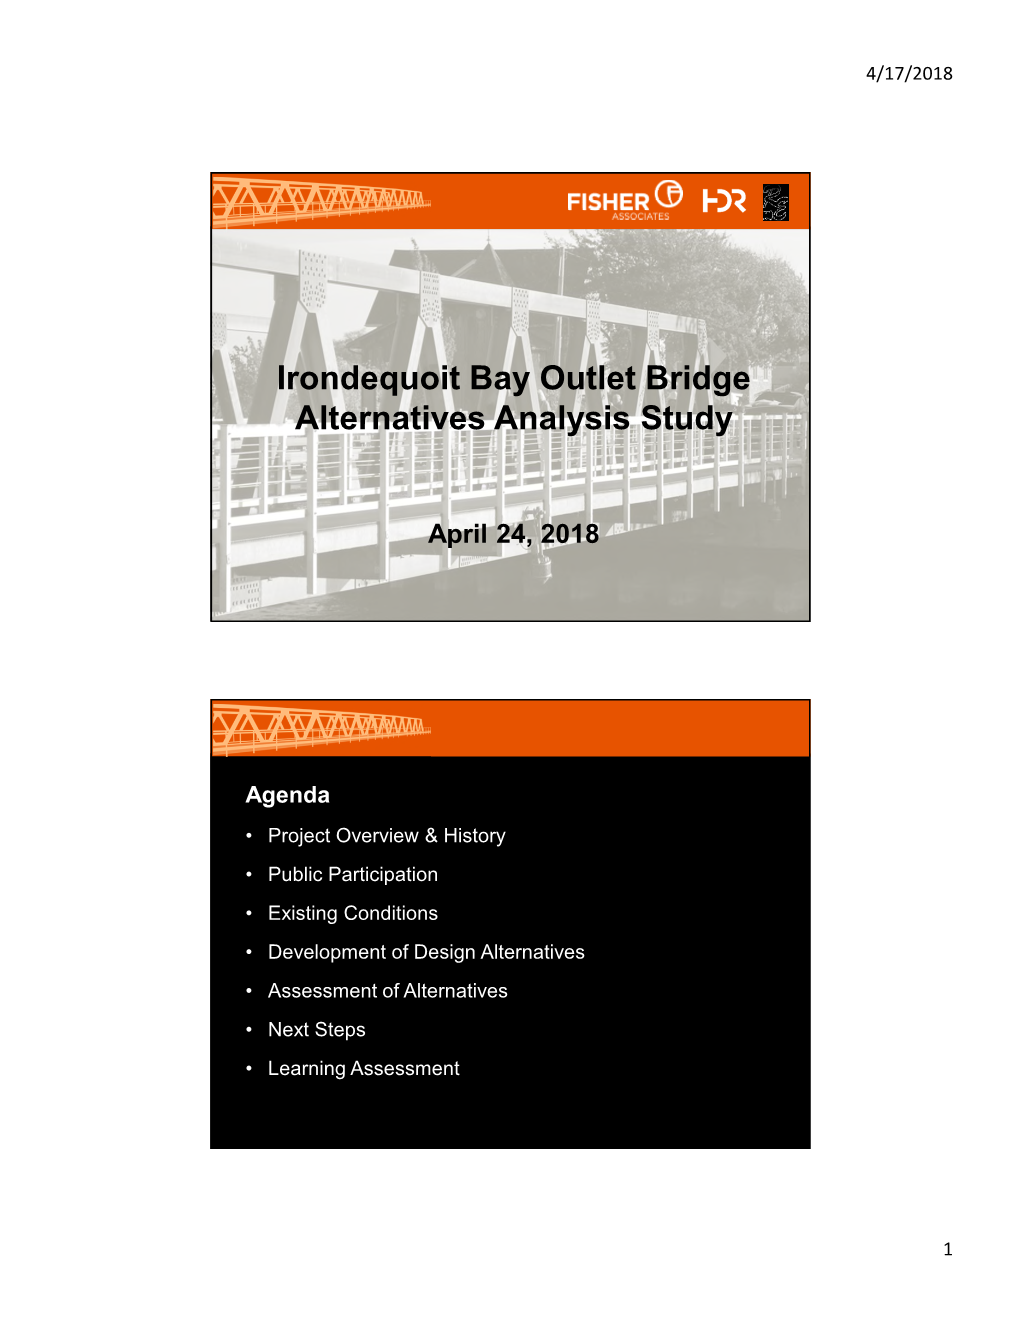 Irondequoit Bay Outlet Bridge Alternatives Analysis Study